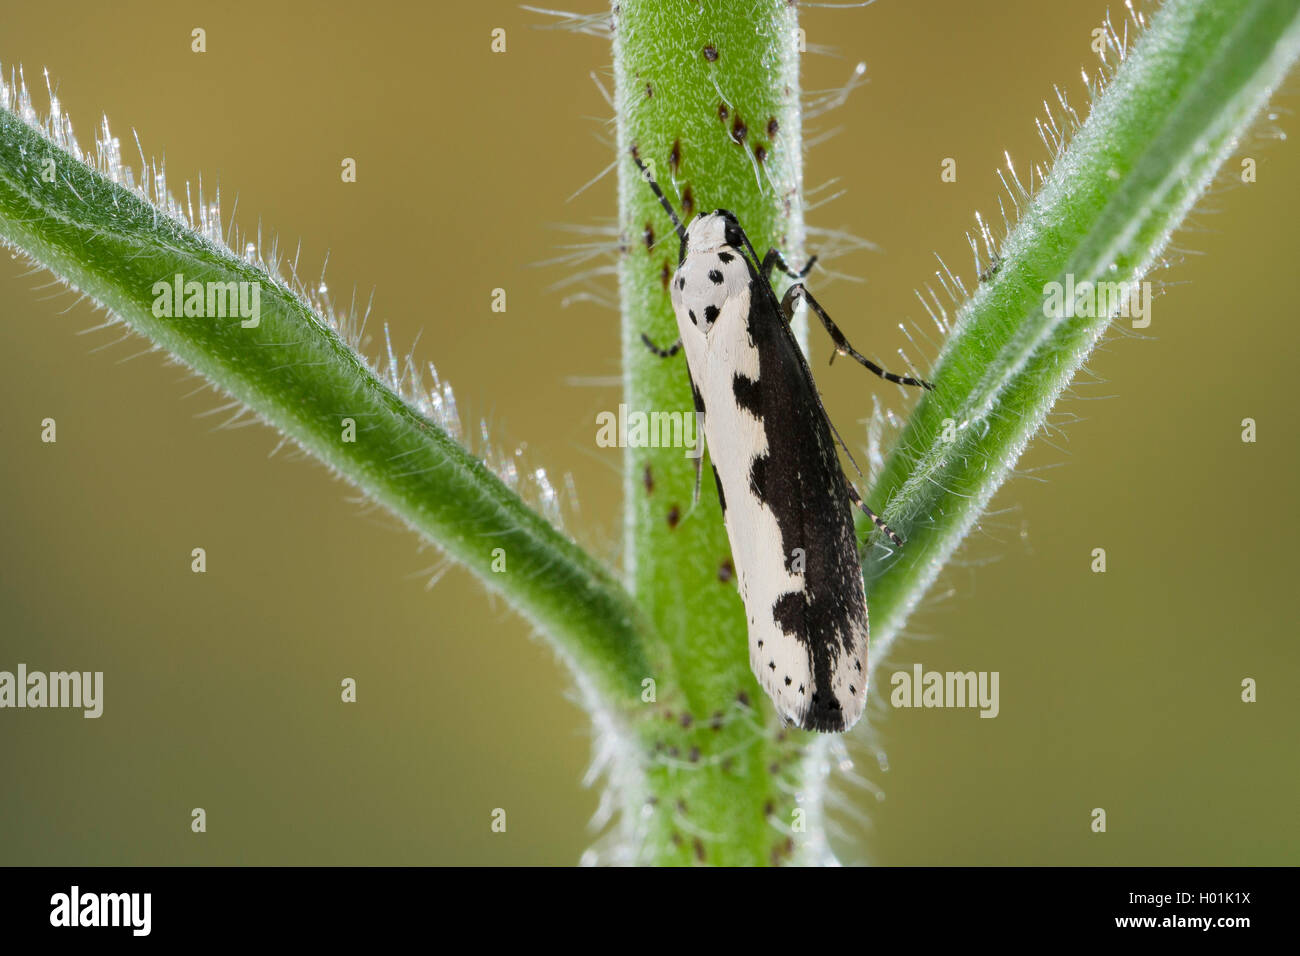 Viper's Bugloss Moth, Vipers Bugloss Moth, Bordered Ermel, Bordered Echium Ermel (Ethmia bipunctella), on a plant, Germany Stock Photo